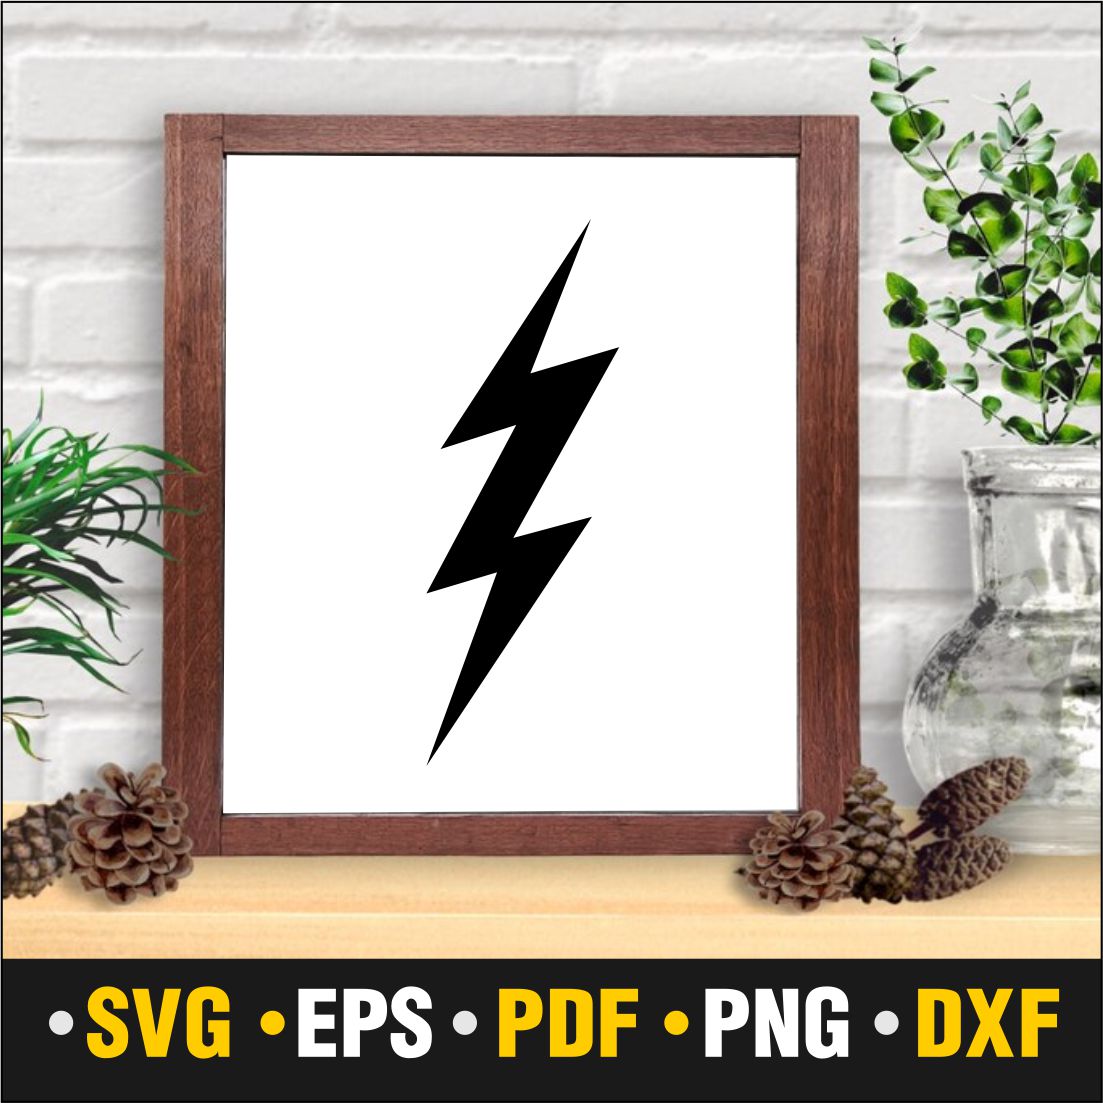 Lightning Bolts SVG, PDF, PNG, DXF, EPS cover image.